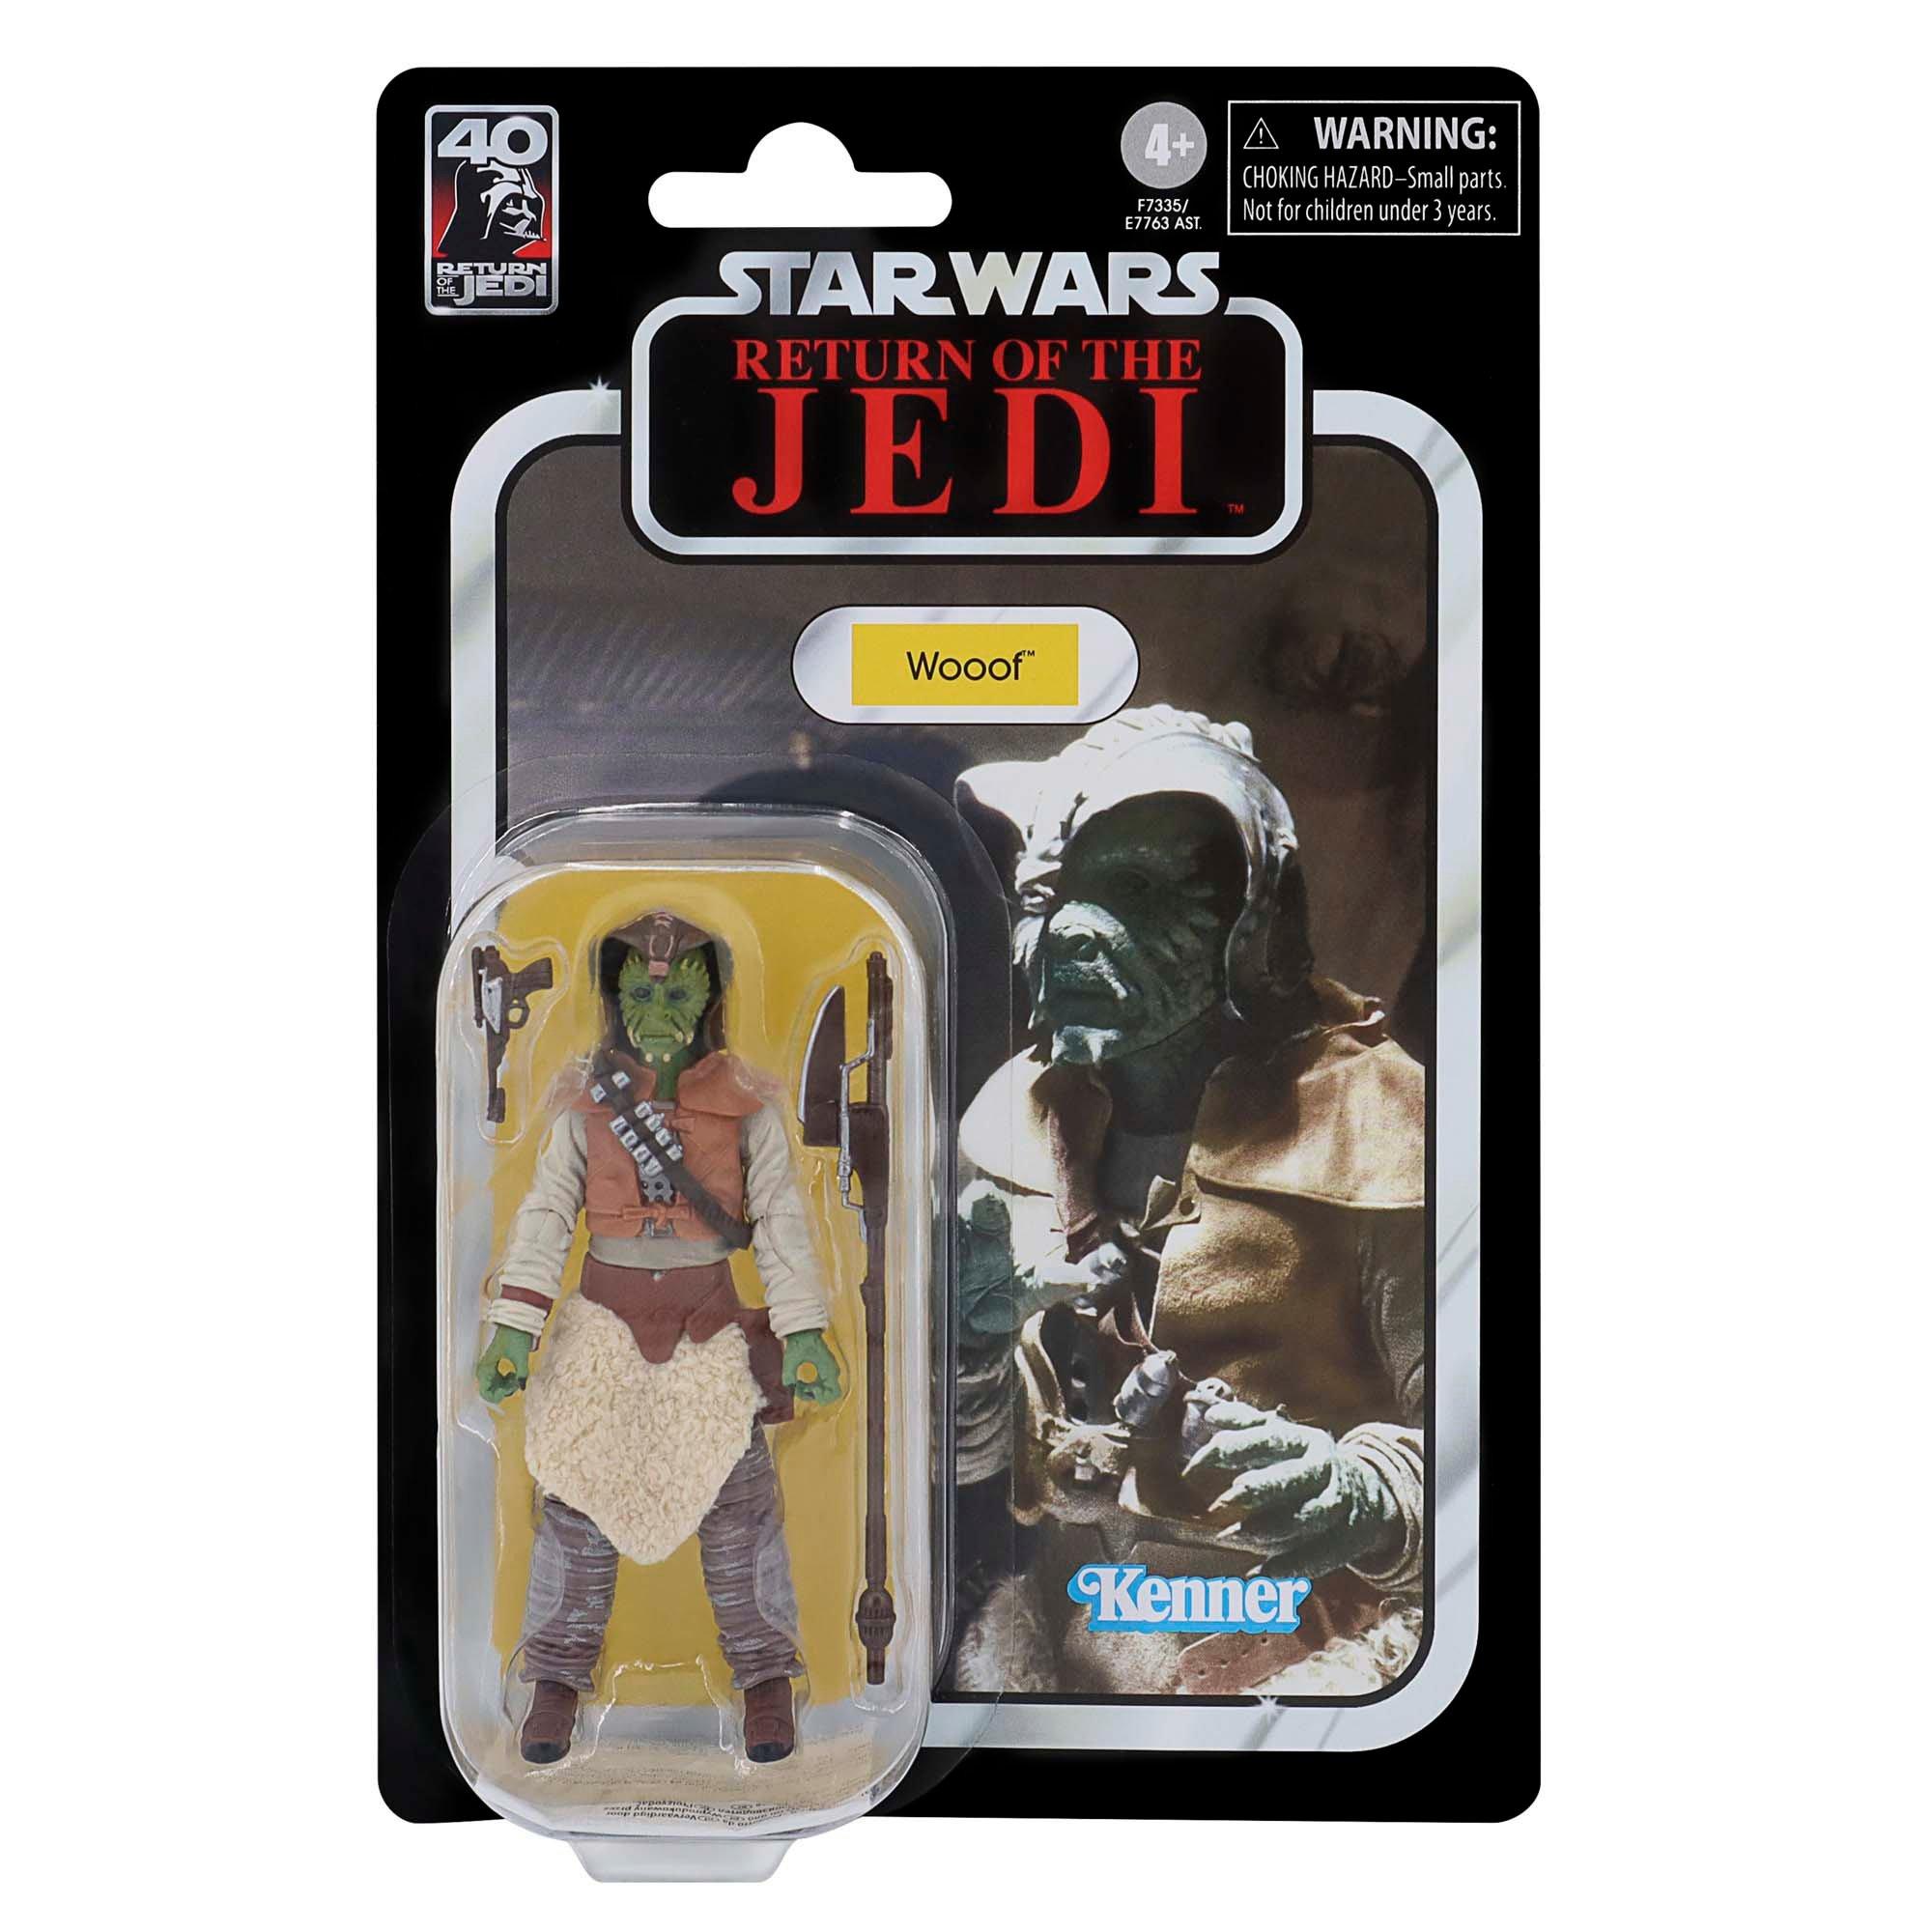 https://media.gamestop.com/i/gamestop/20001861_ALT03/Hasbro-Star-Wars-The-Vintage-Collection-Star-Wars-Return-of-the-Jedi-Wooof-3.75-in-Action-Figure?$pdp$